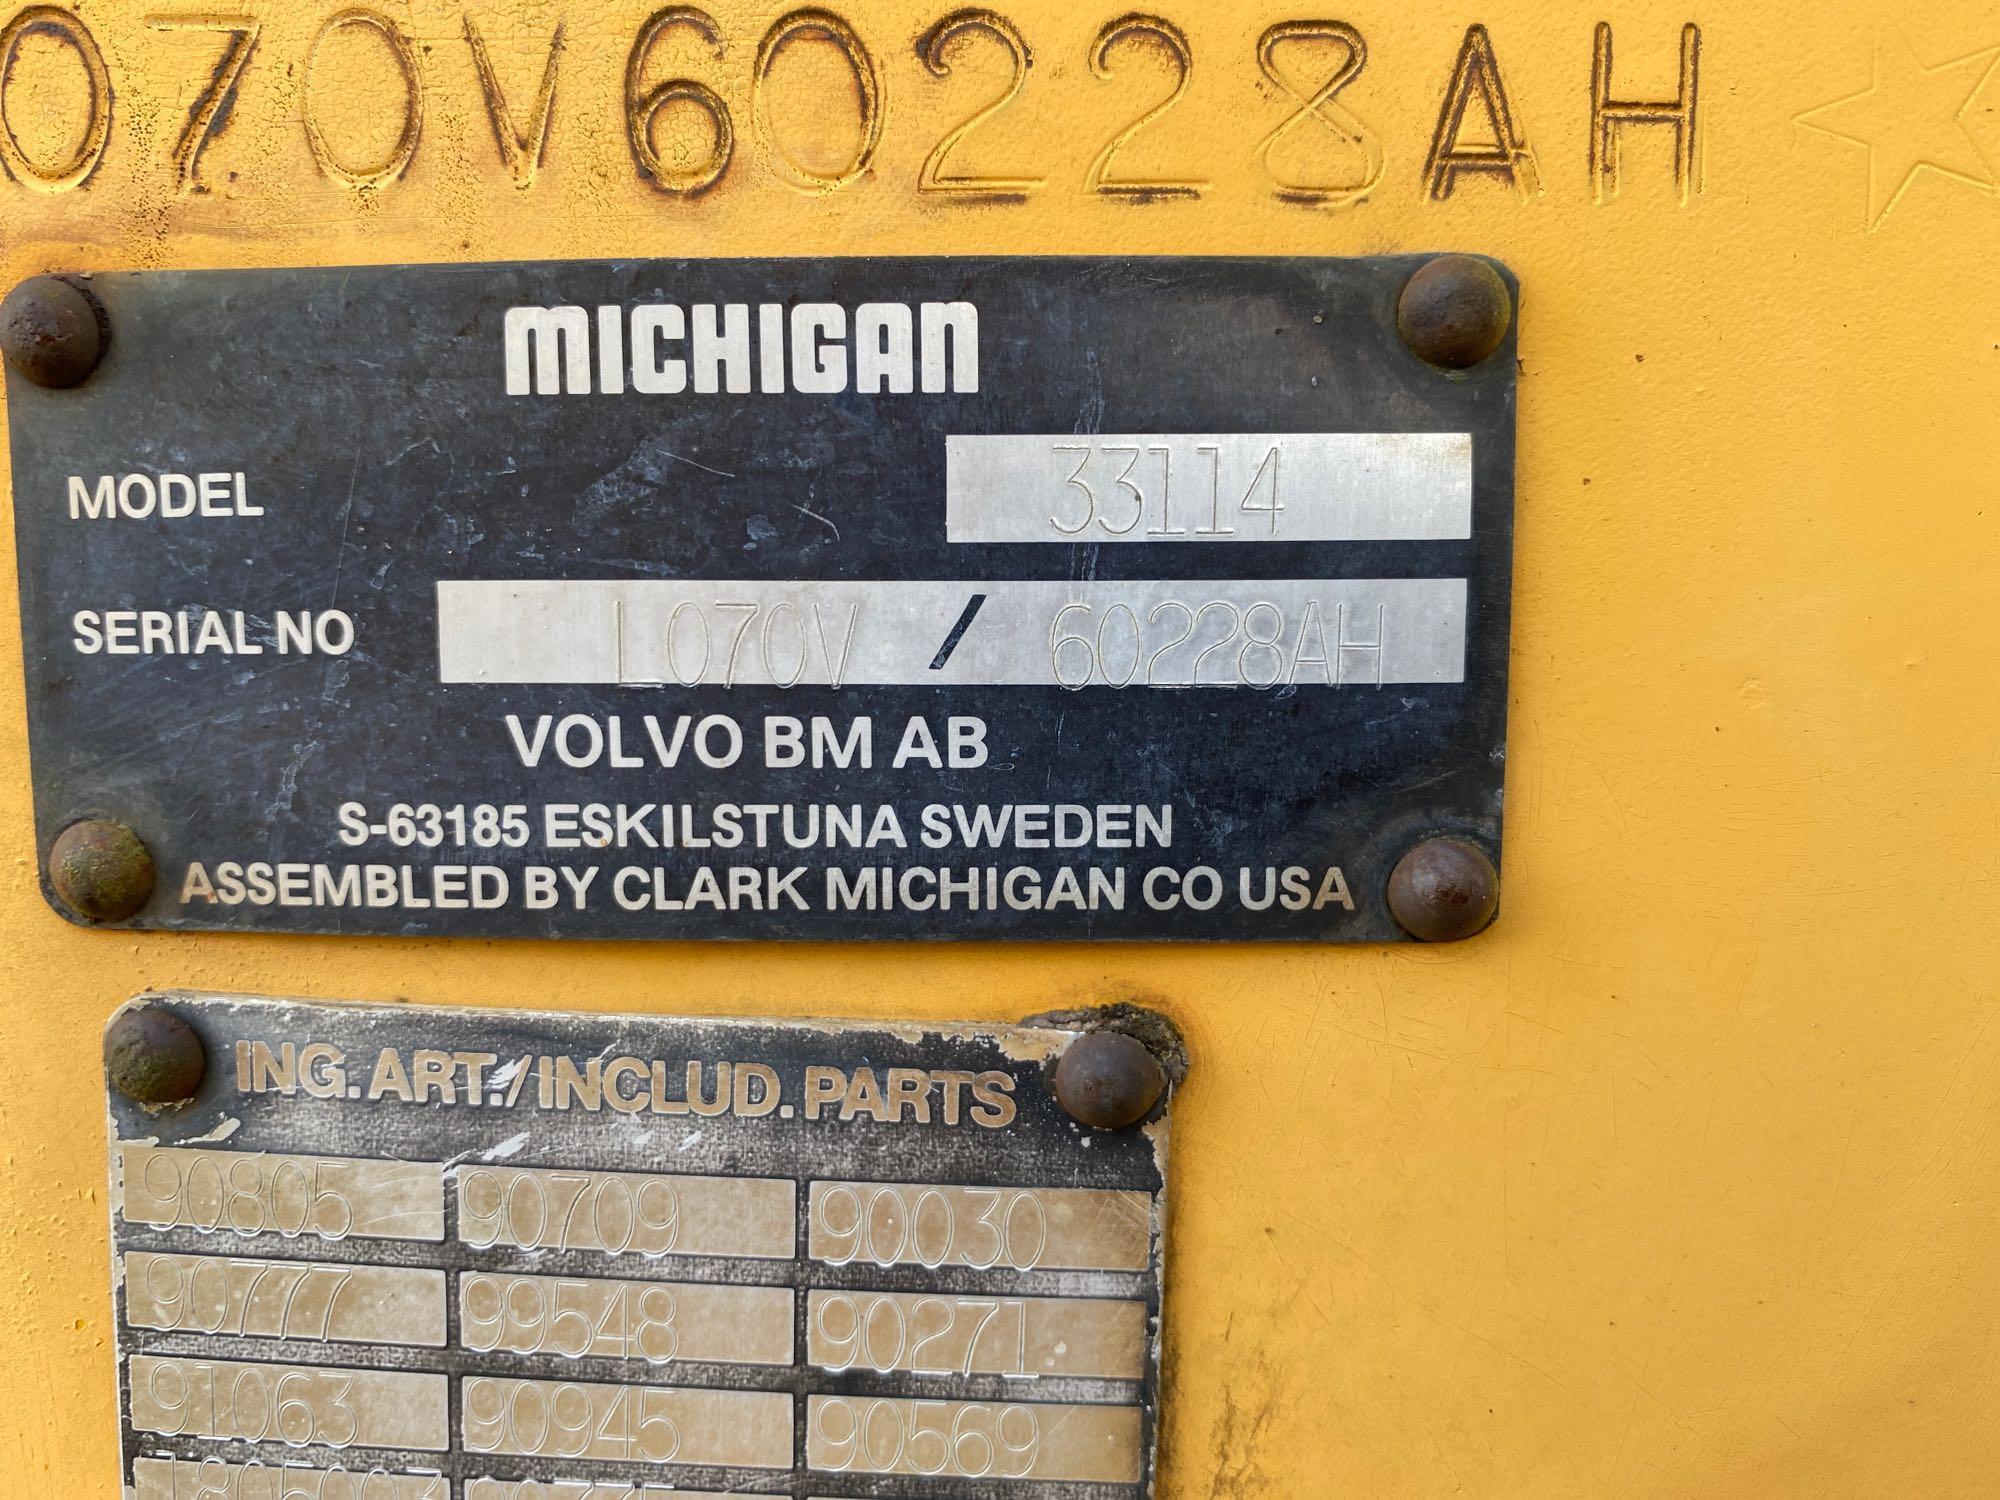 Michigan 33114 Articulated Wheel Loader